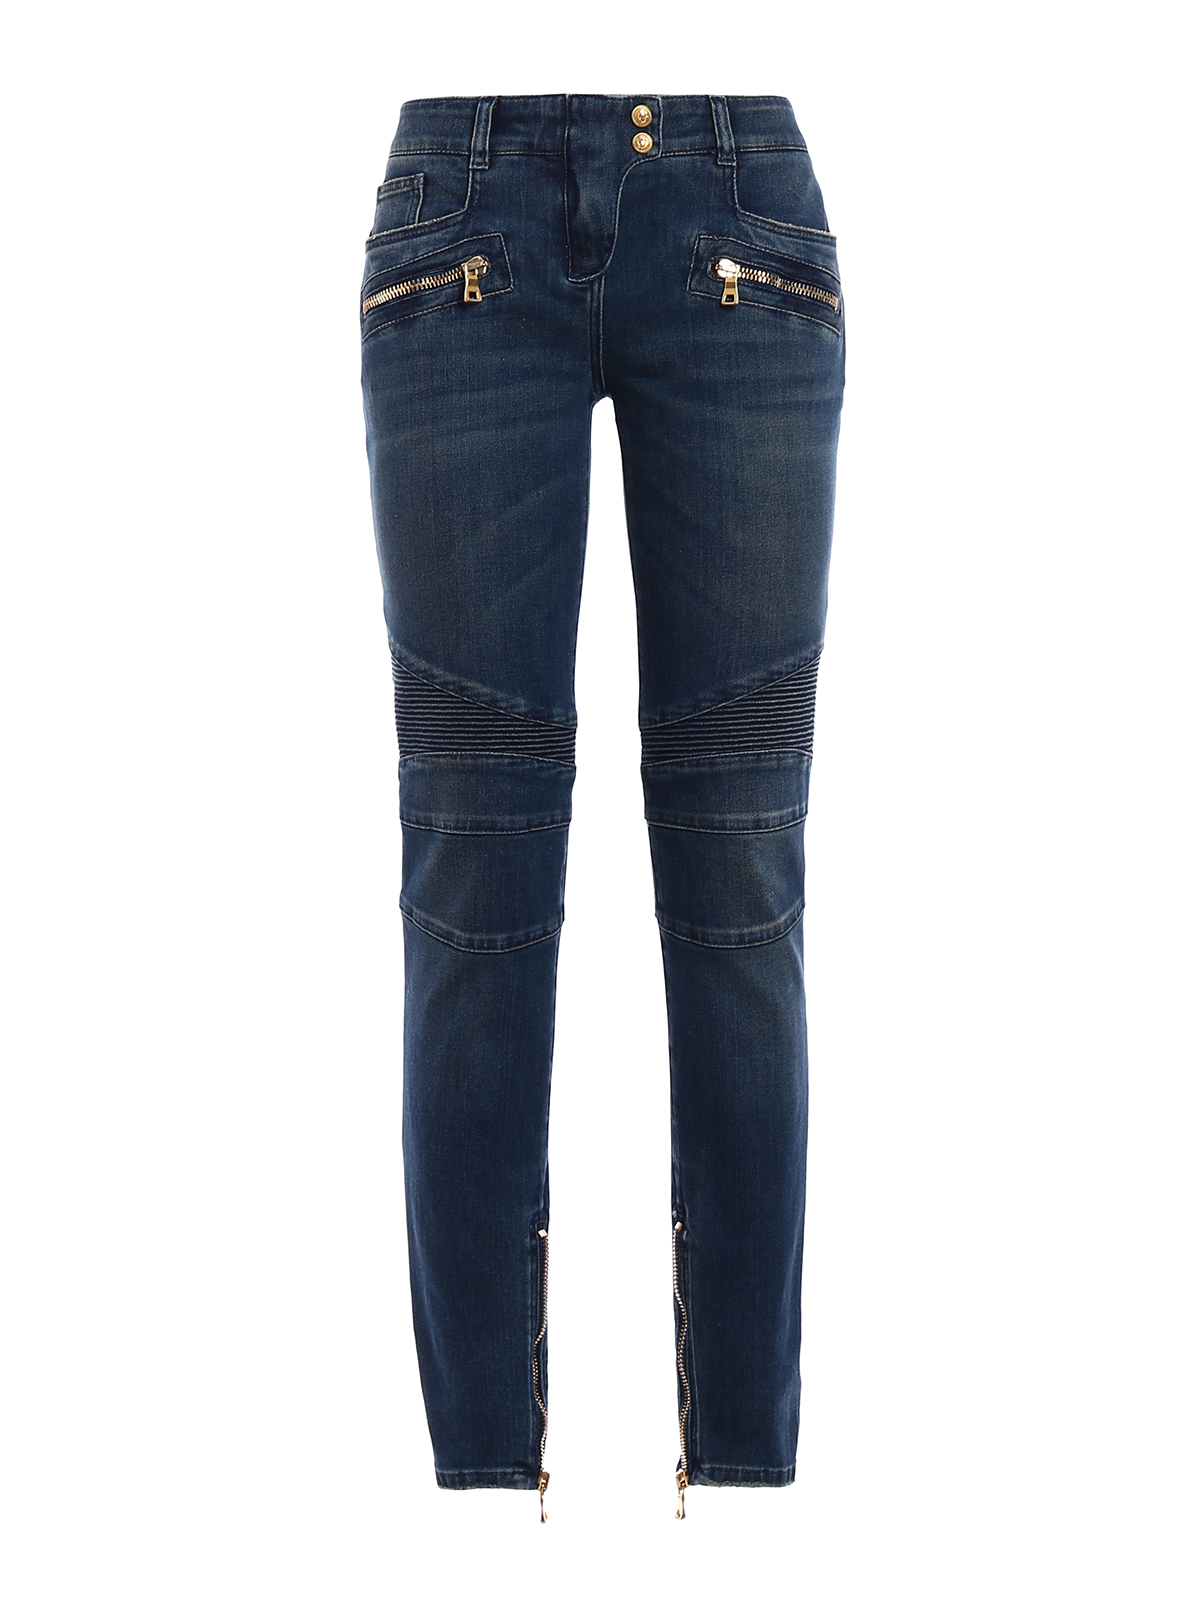 balmain inspired jeans